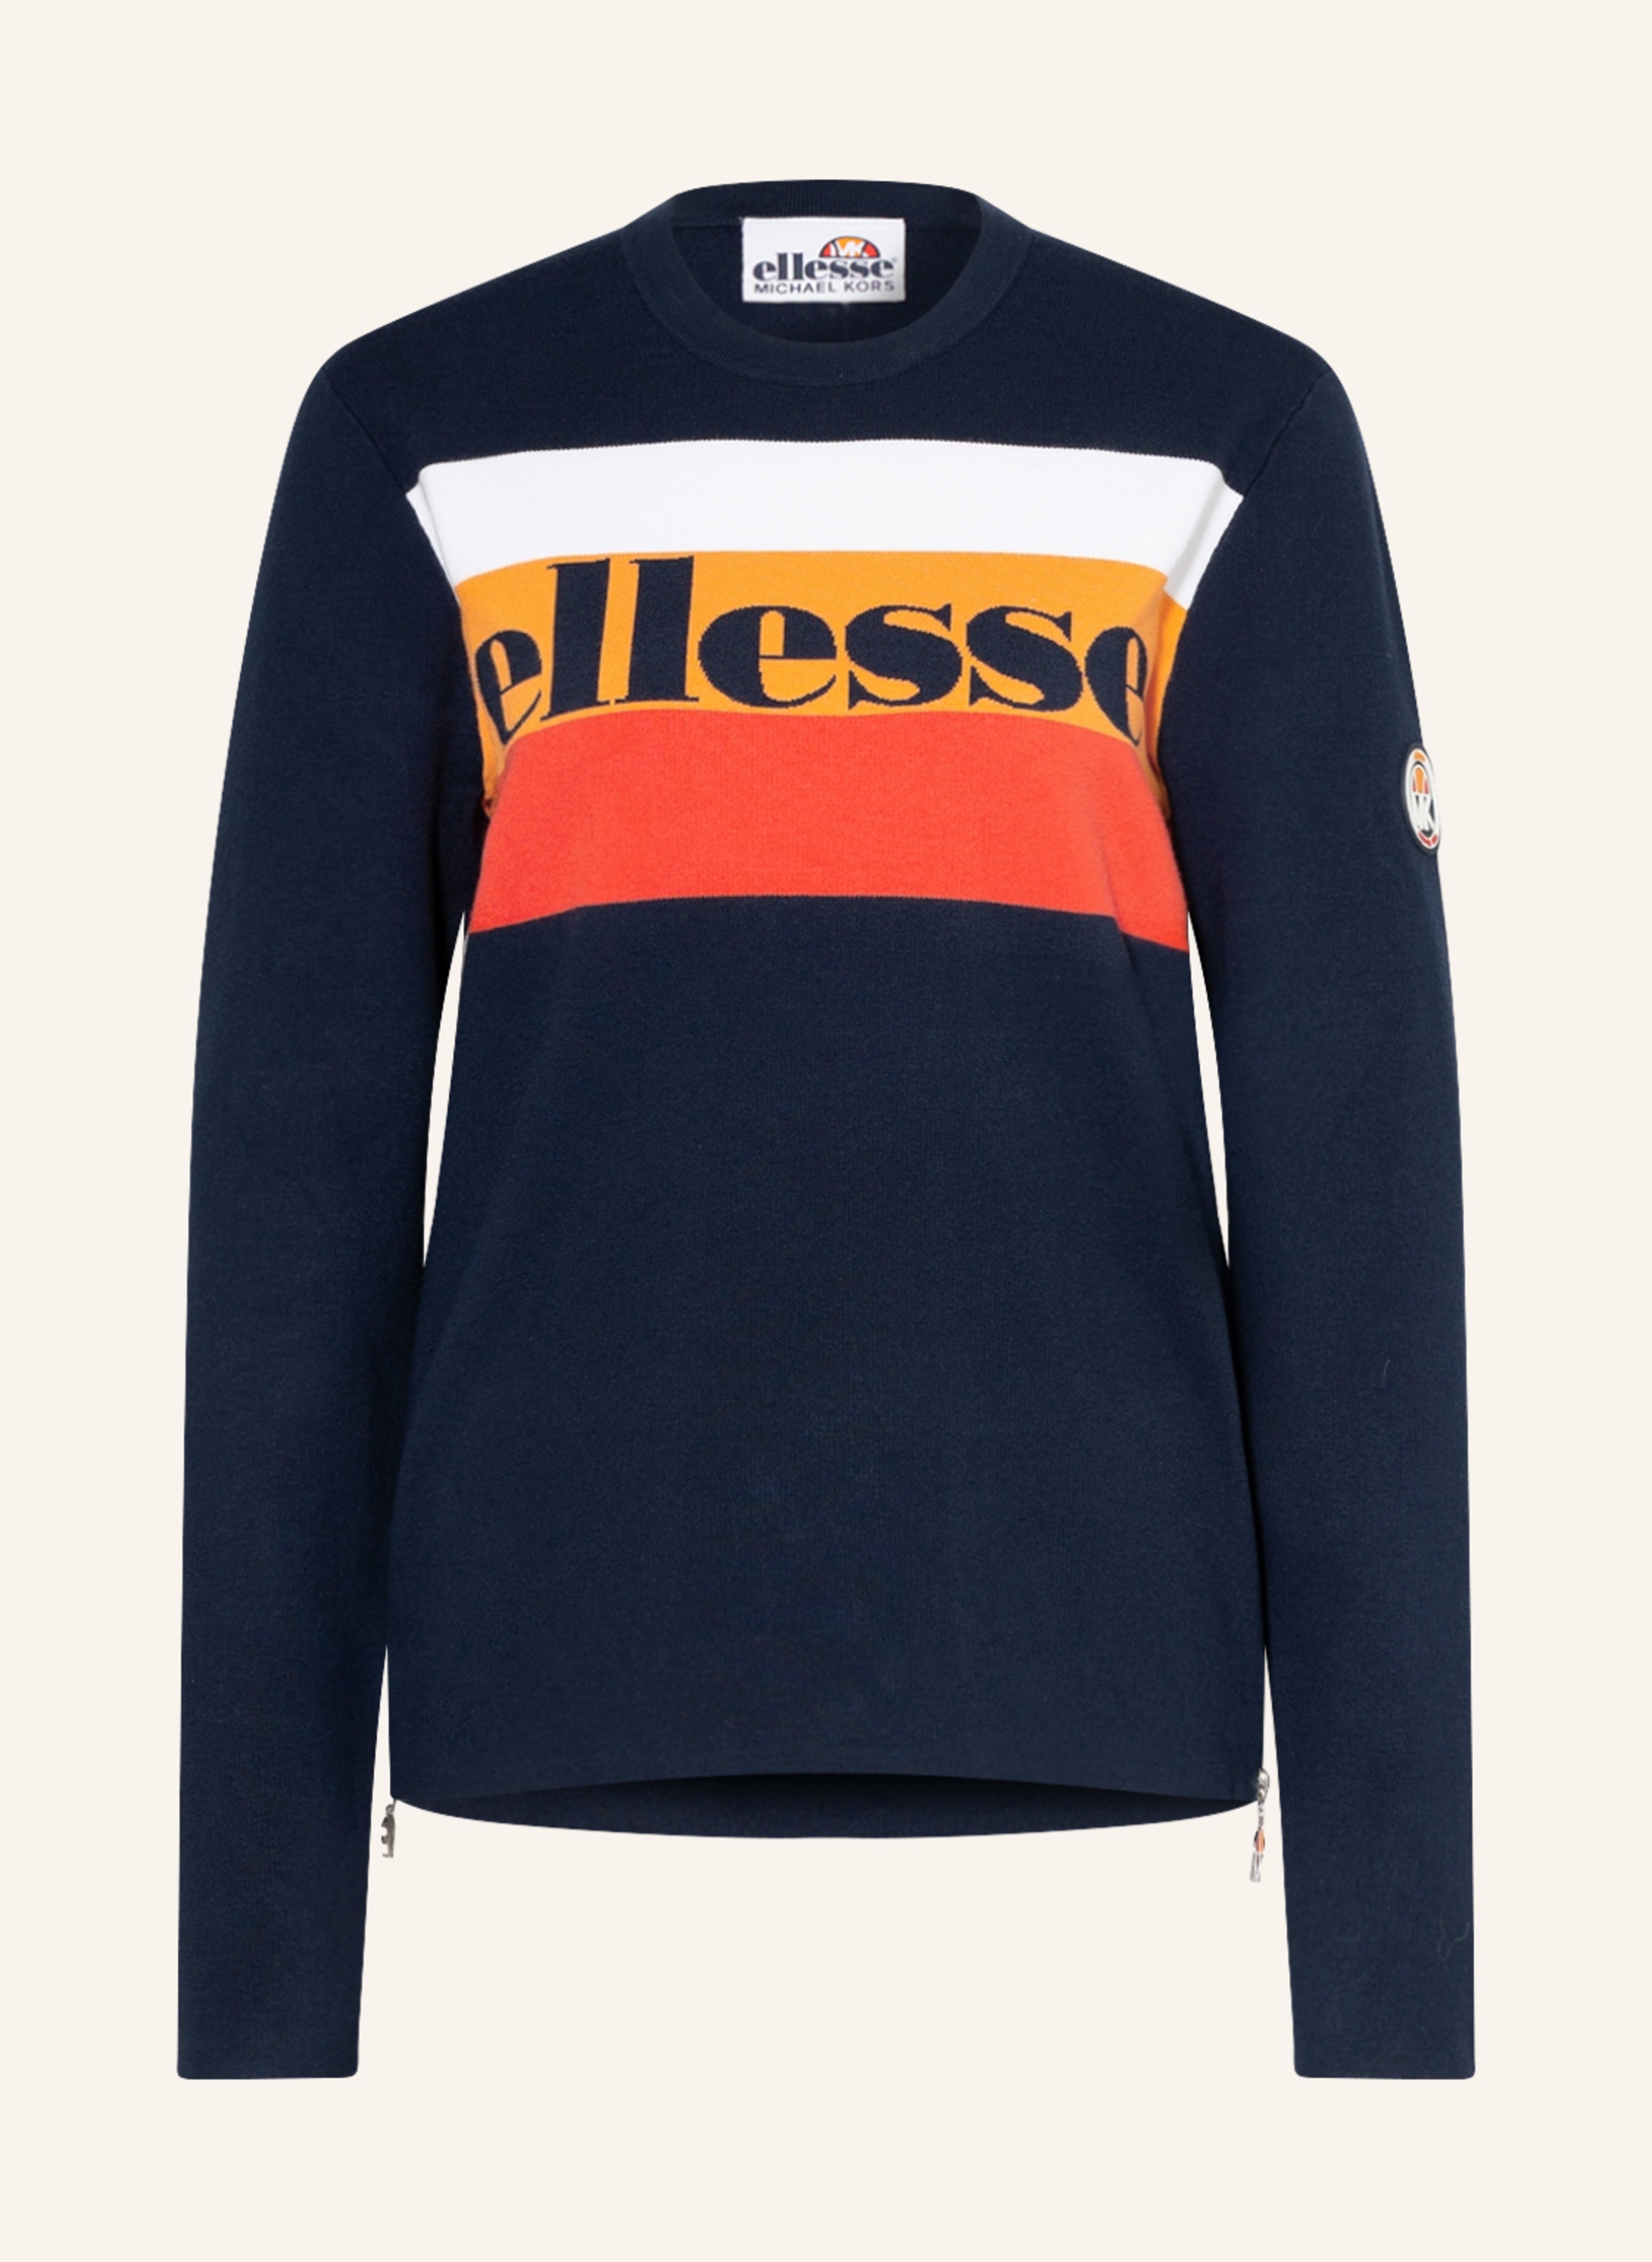 MICHAEL KORS Sweatshirt in dark blue/ orange/ red | Breuninger